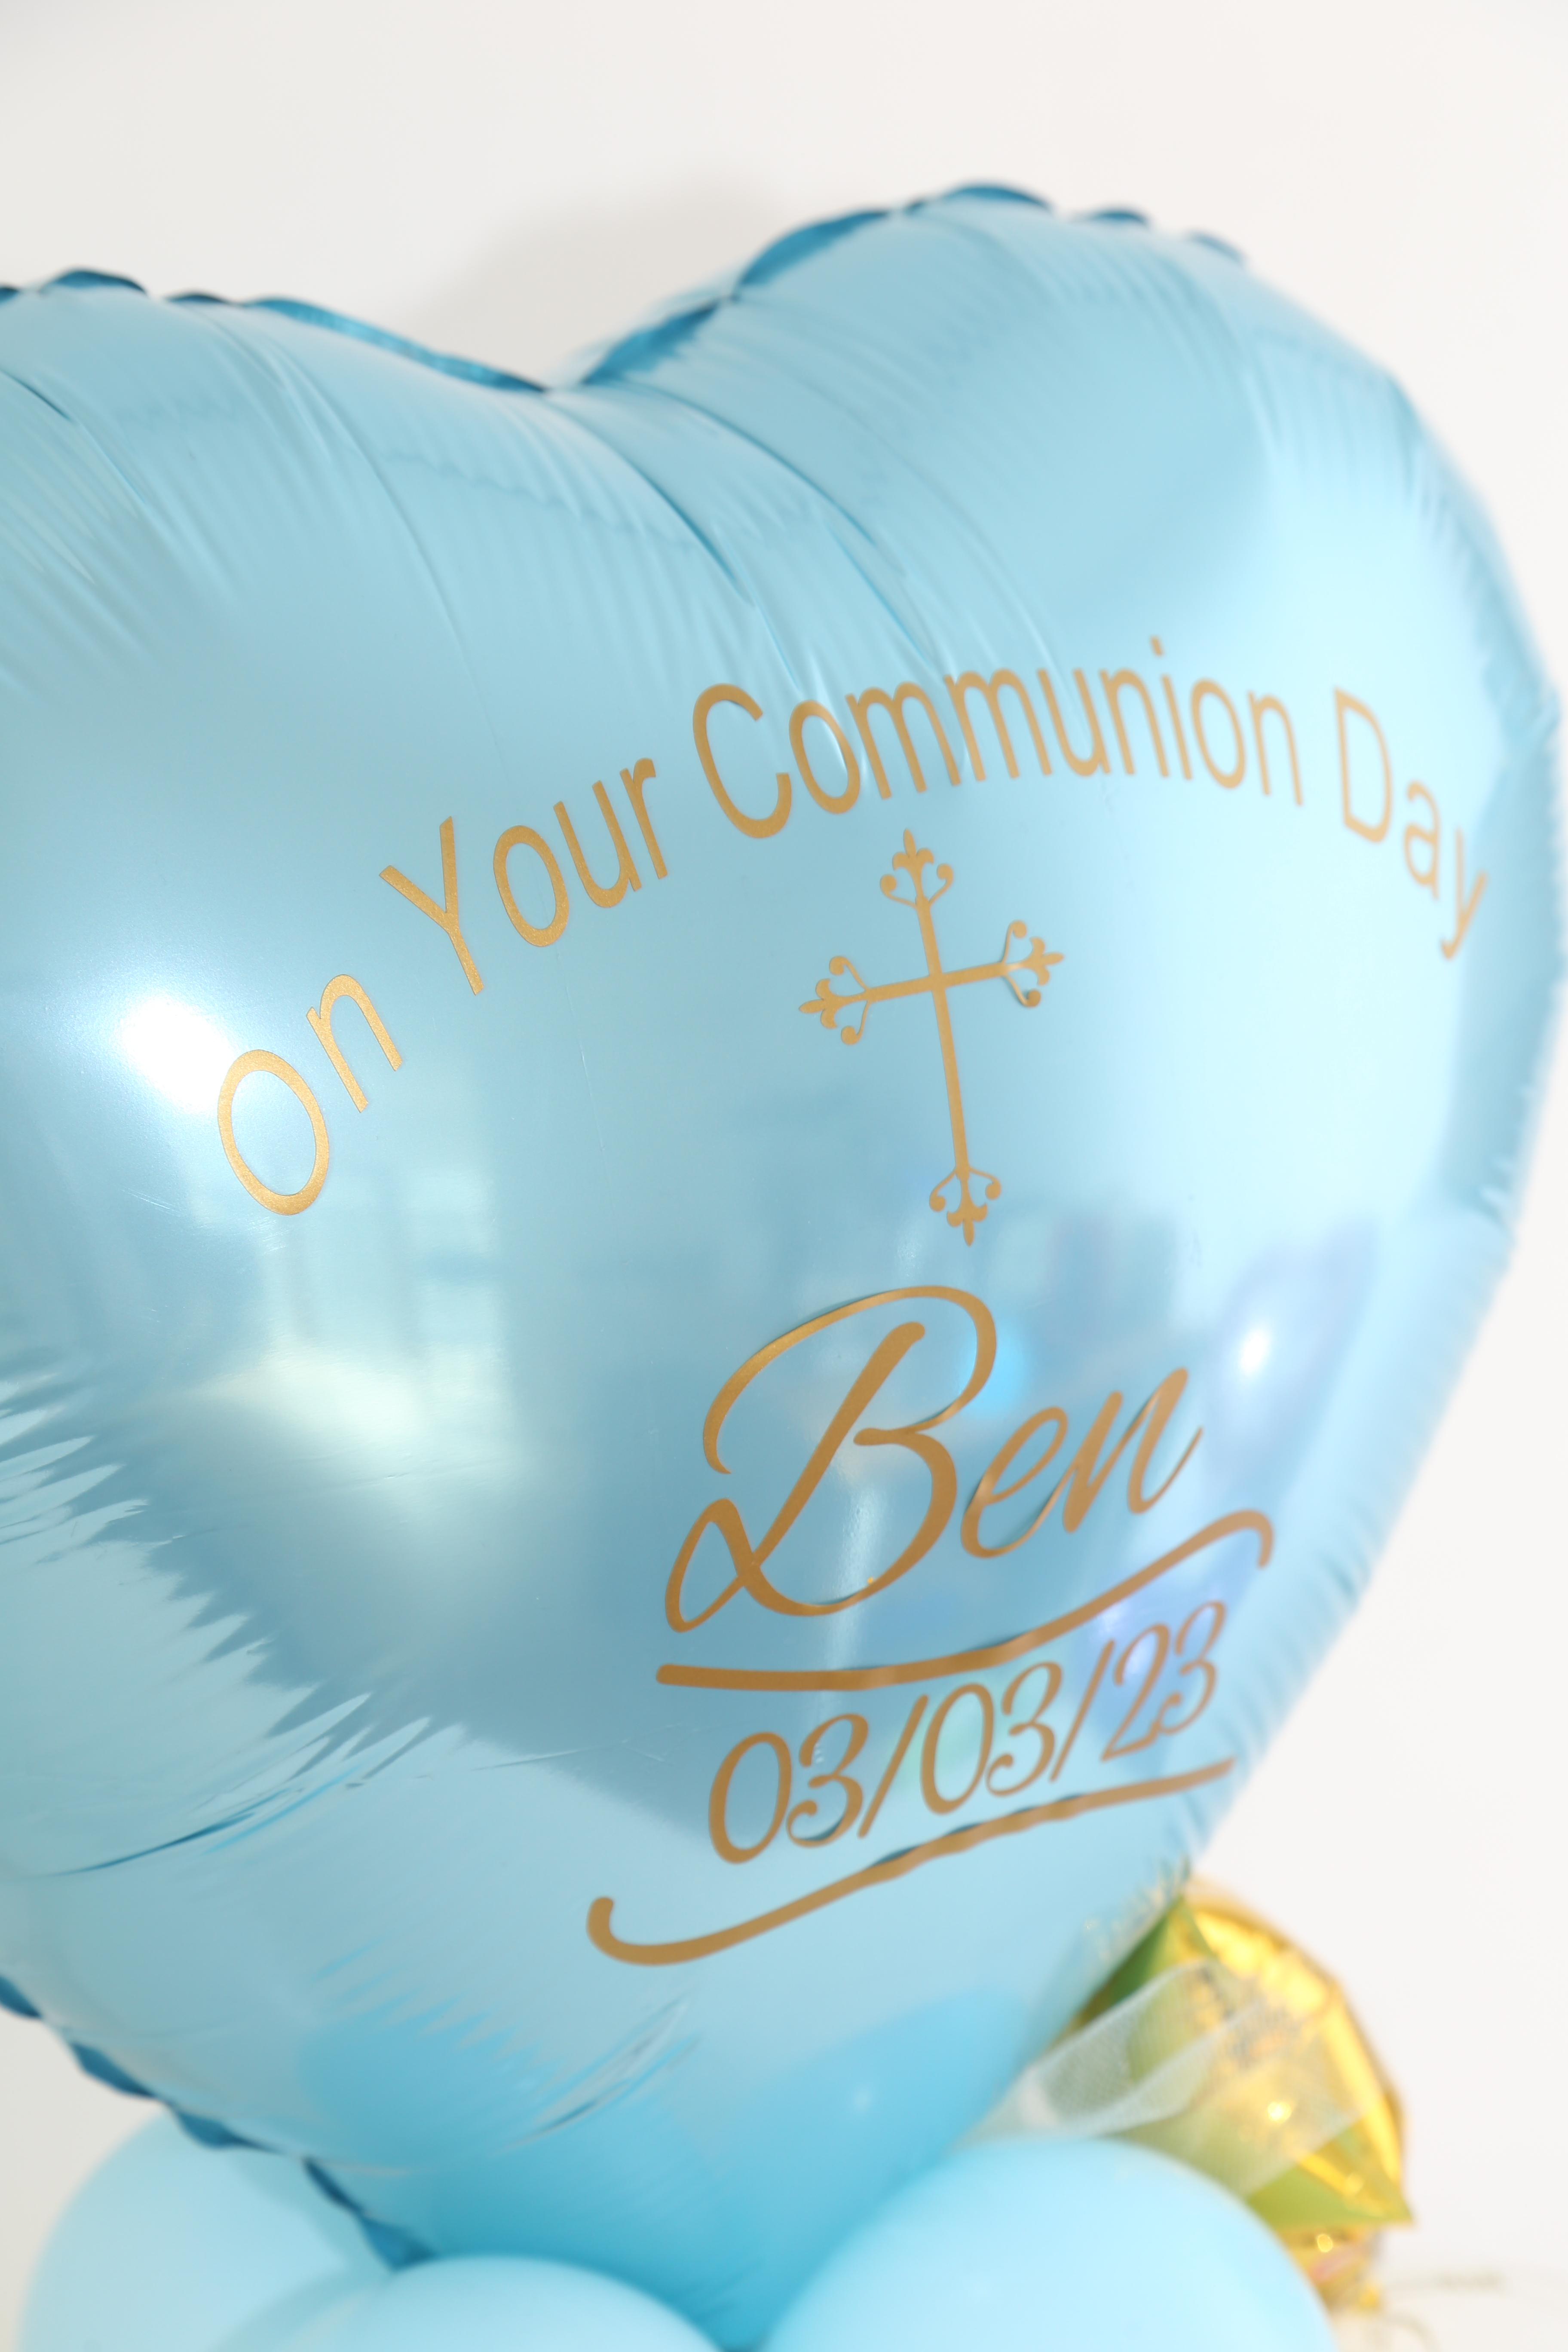 Communion Balloons